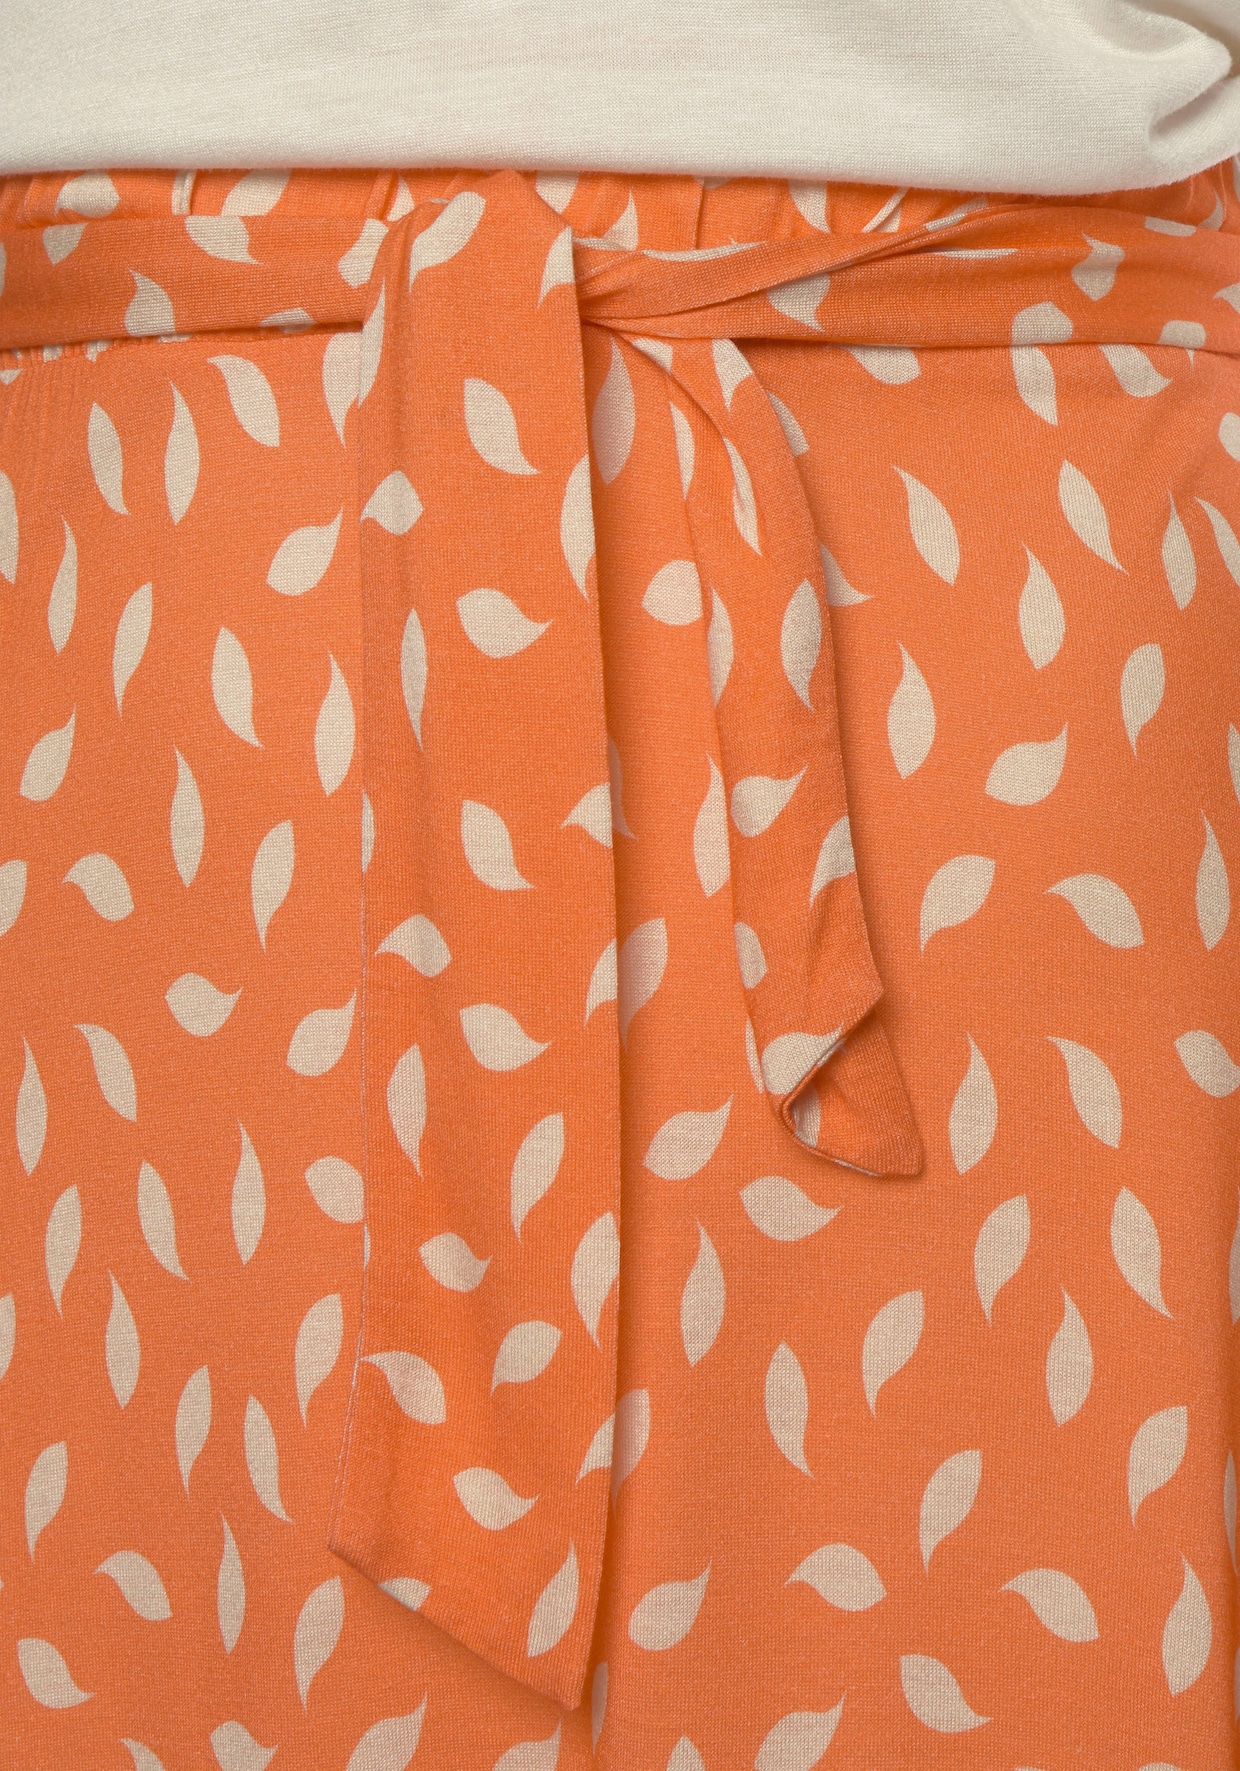 Vivance Jerseykleid - orange-creme bedruckt